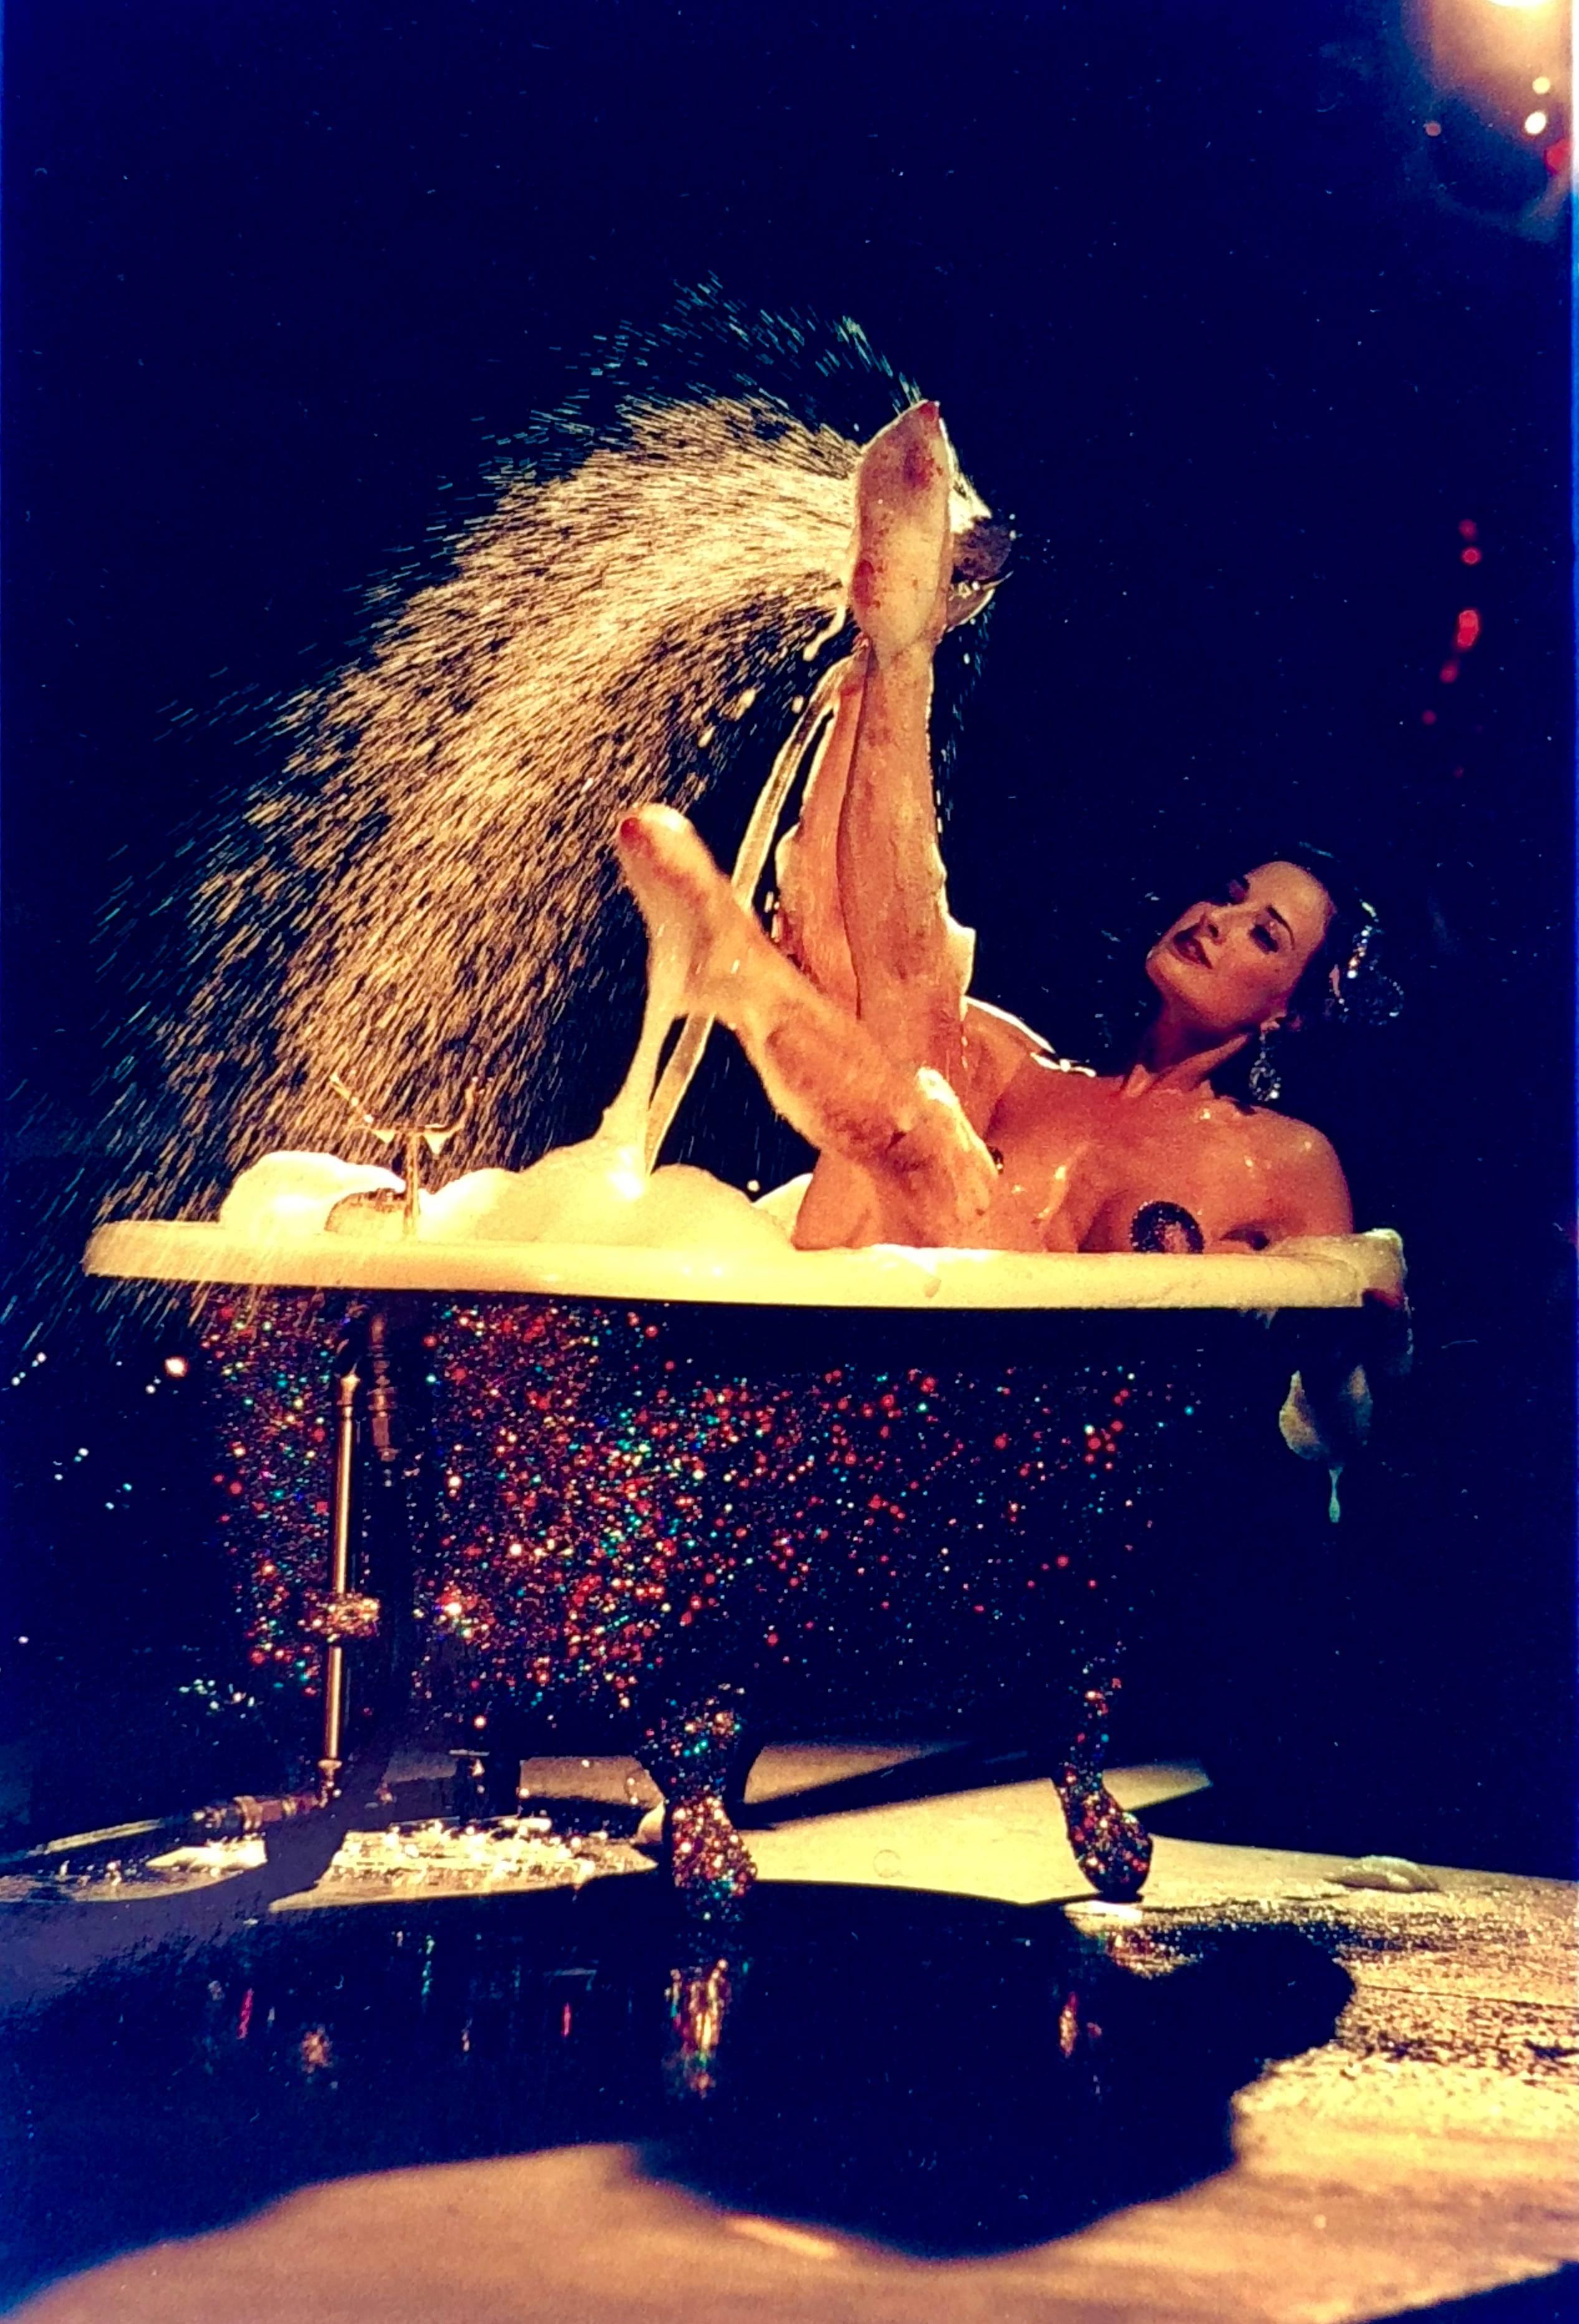 Richard Heeps Nude Photograph - Burlesque Series, Boudoir III, Tease-O-Rama, Hollywood, Los Angeles 